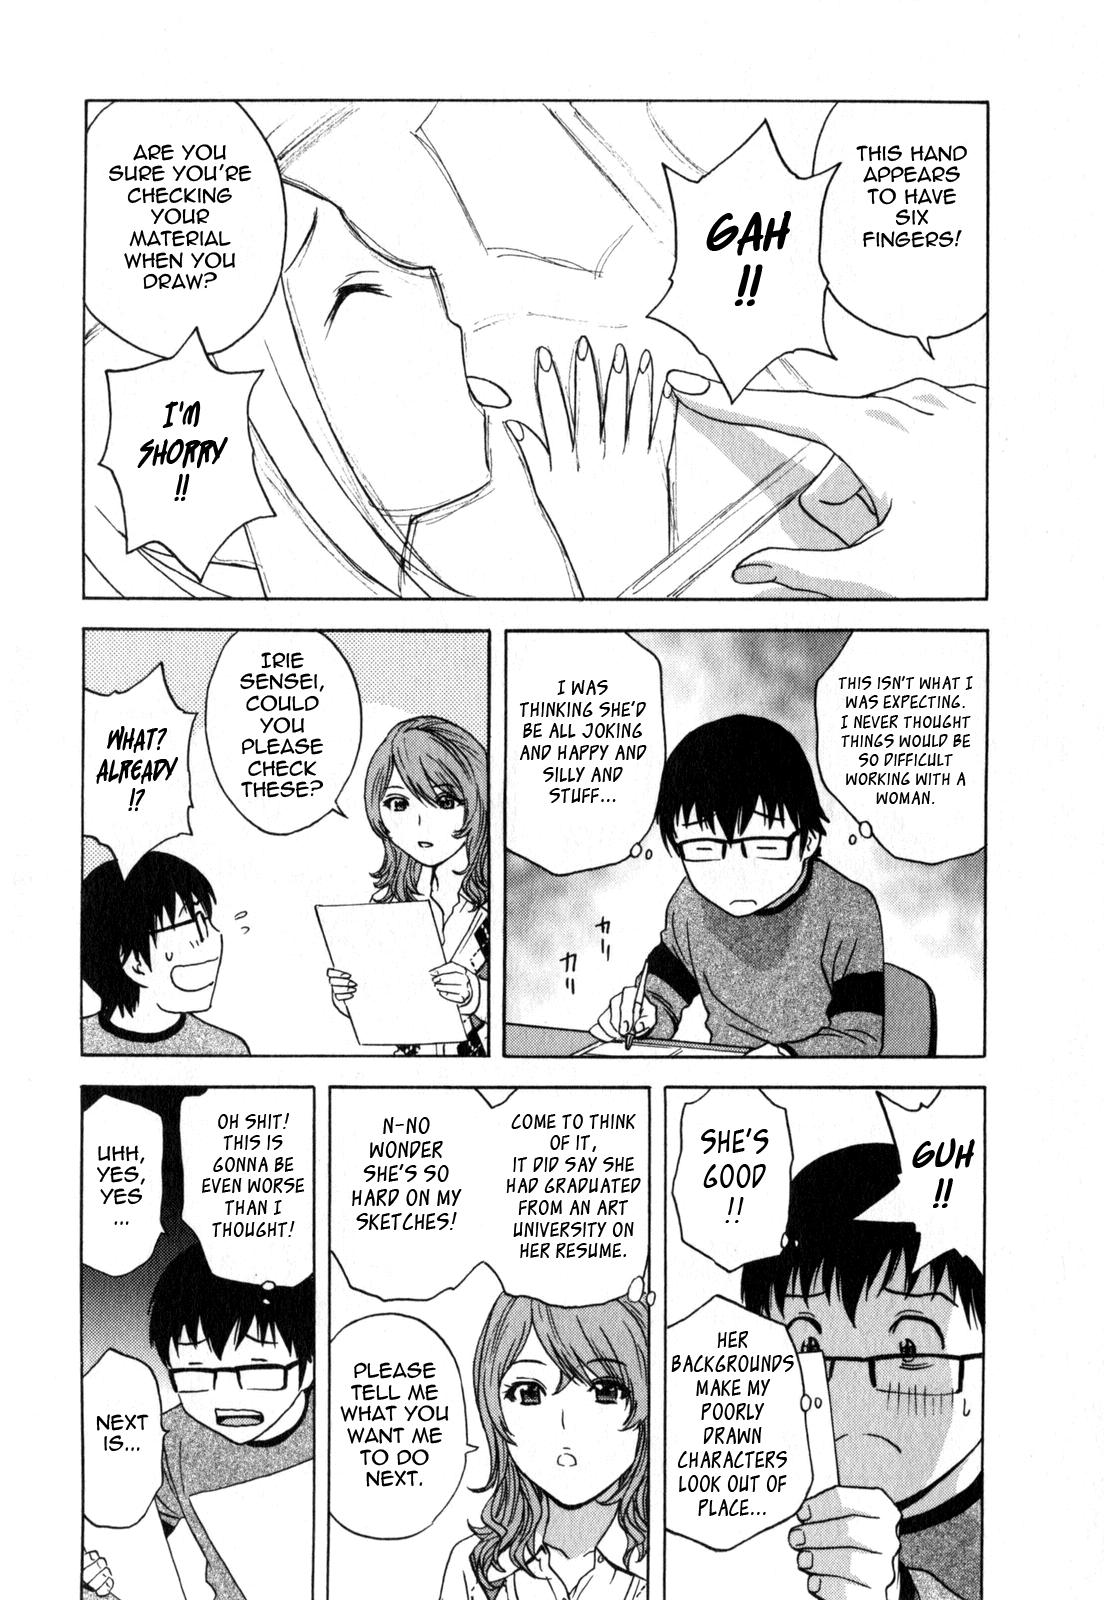 [Hidemaru] Life with Married Women Just Like a Manga 2 - Ch. 1-4 [English] {Tadanohito} 31